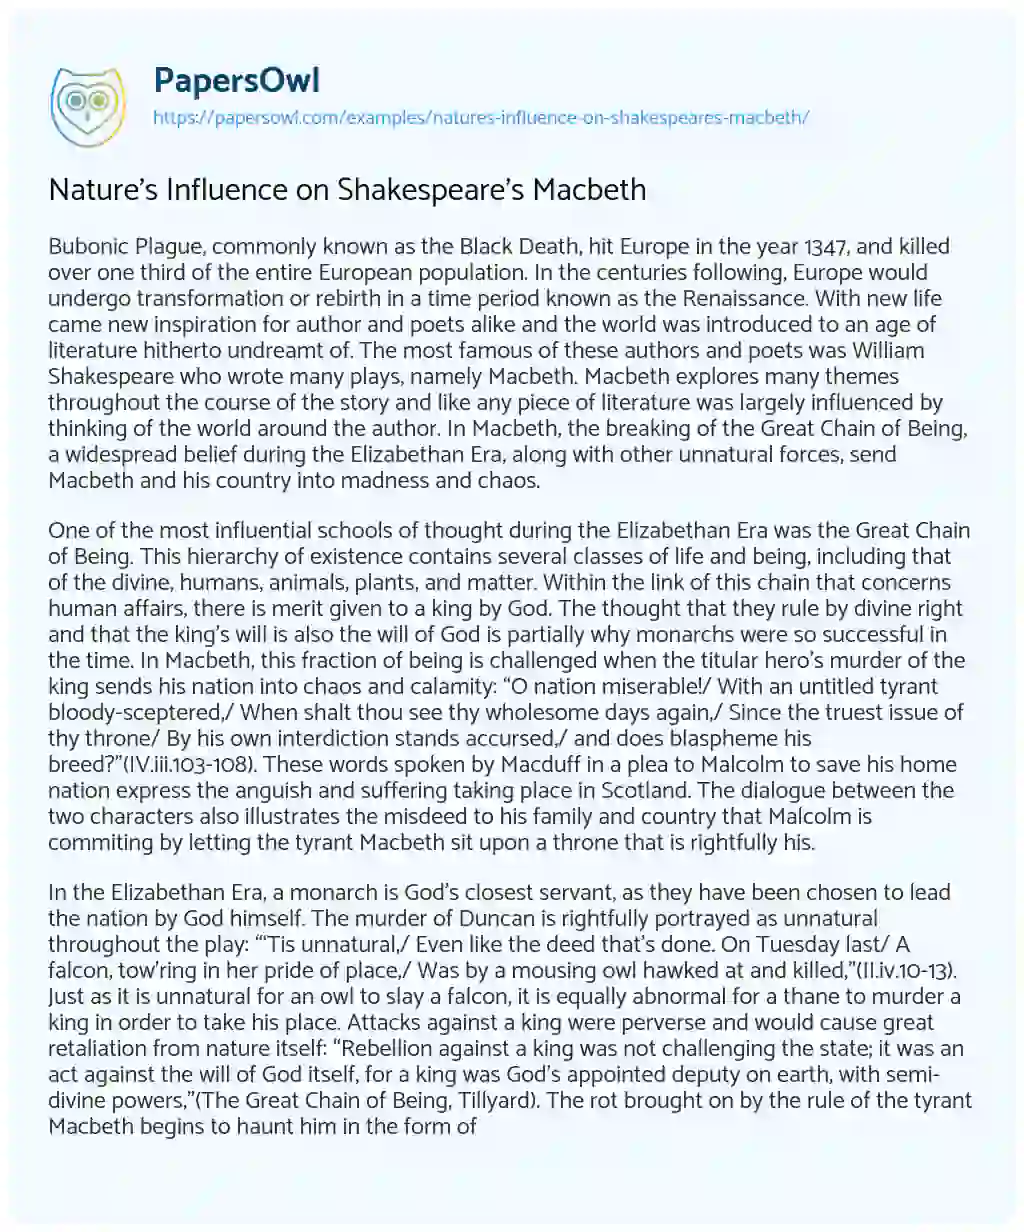 Essay on Nature’s Influence on Shakespeare’s Macbeth